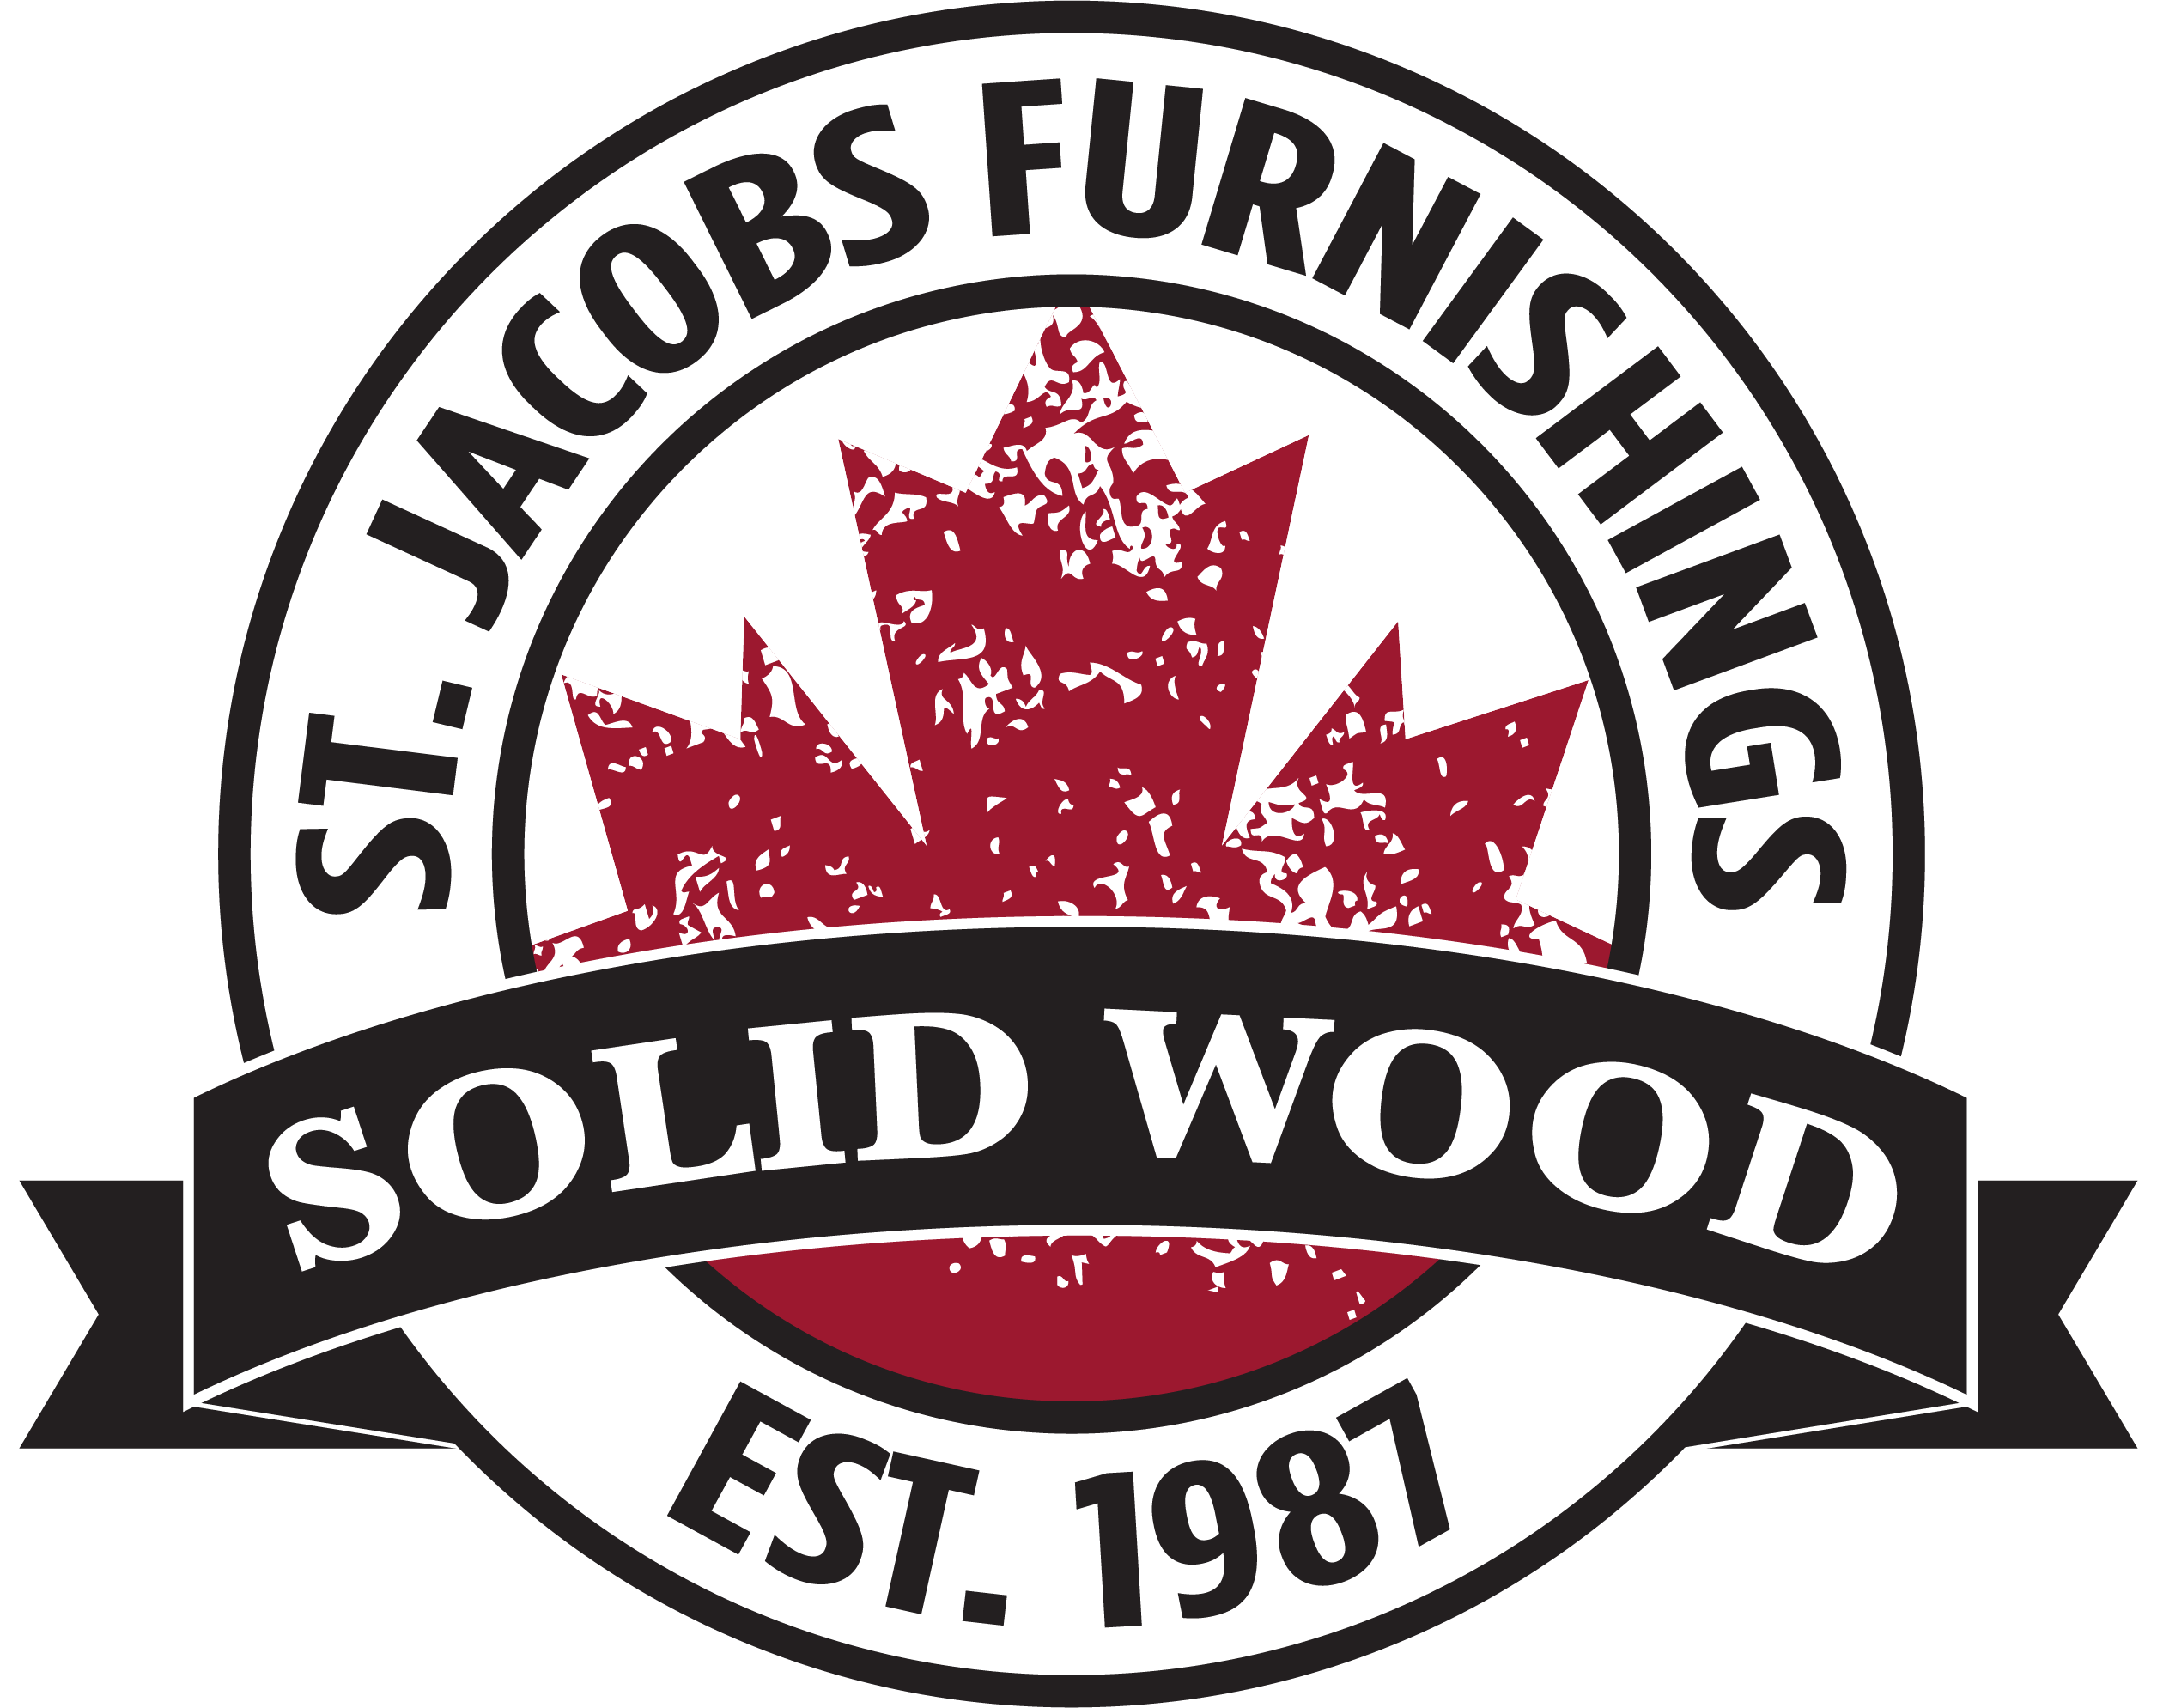 St Jacobs Furnishings, solid wood, est. 1987, logo.